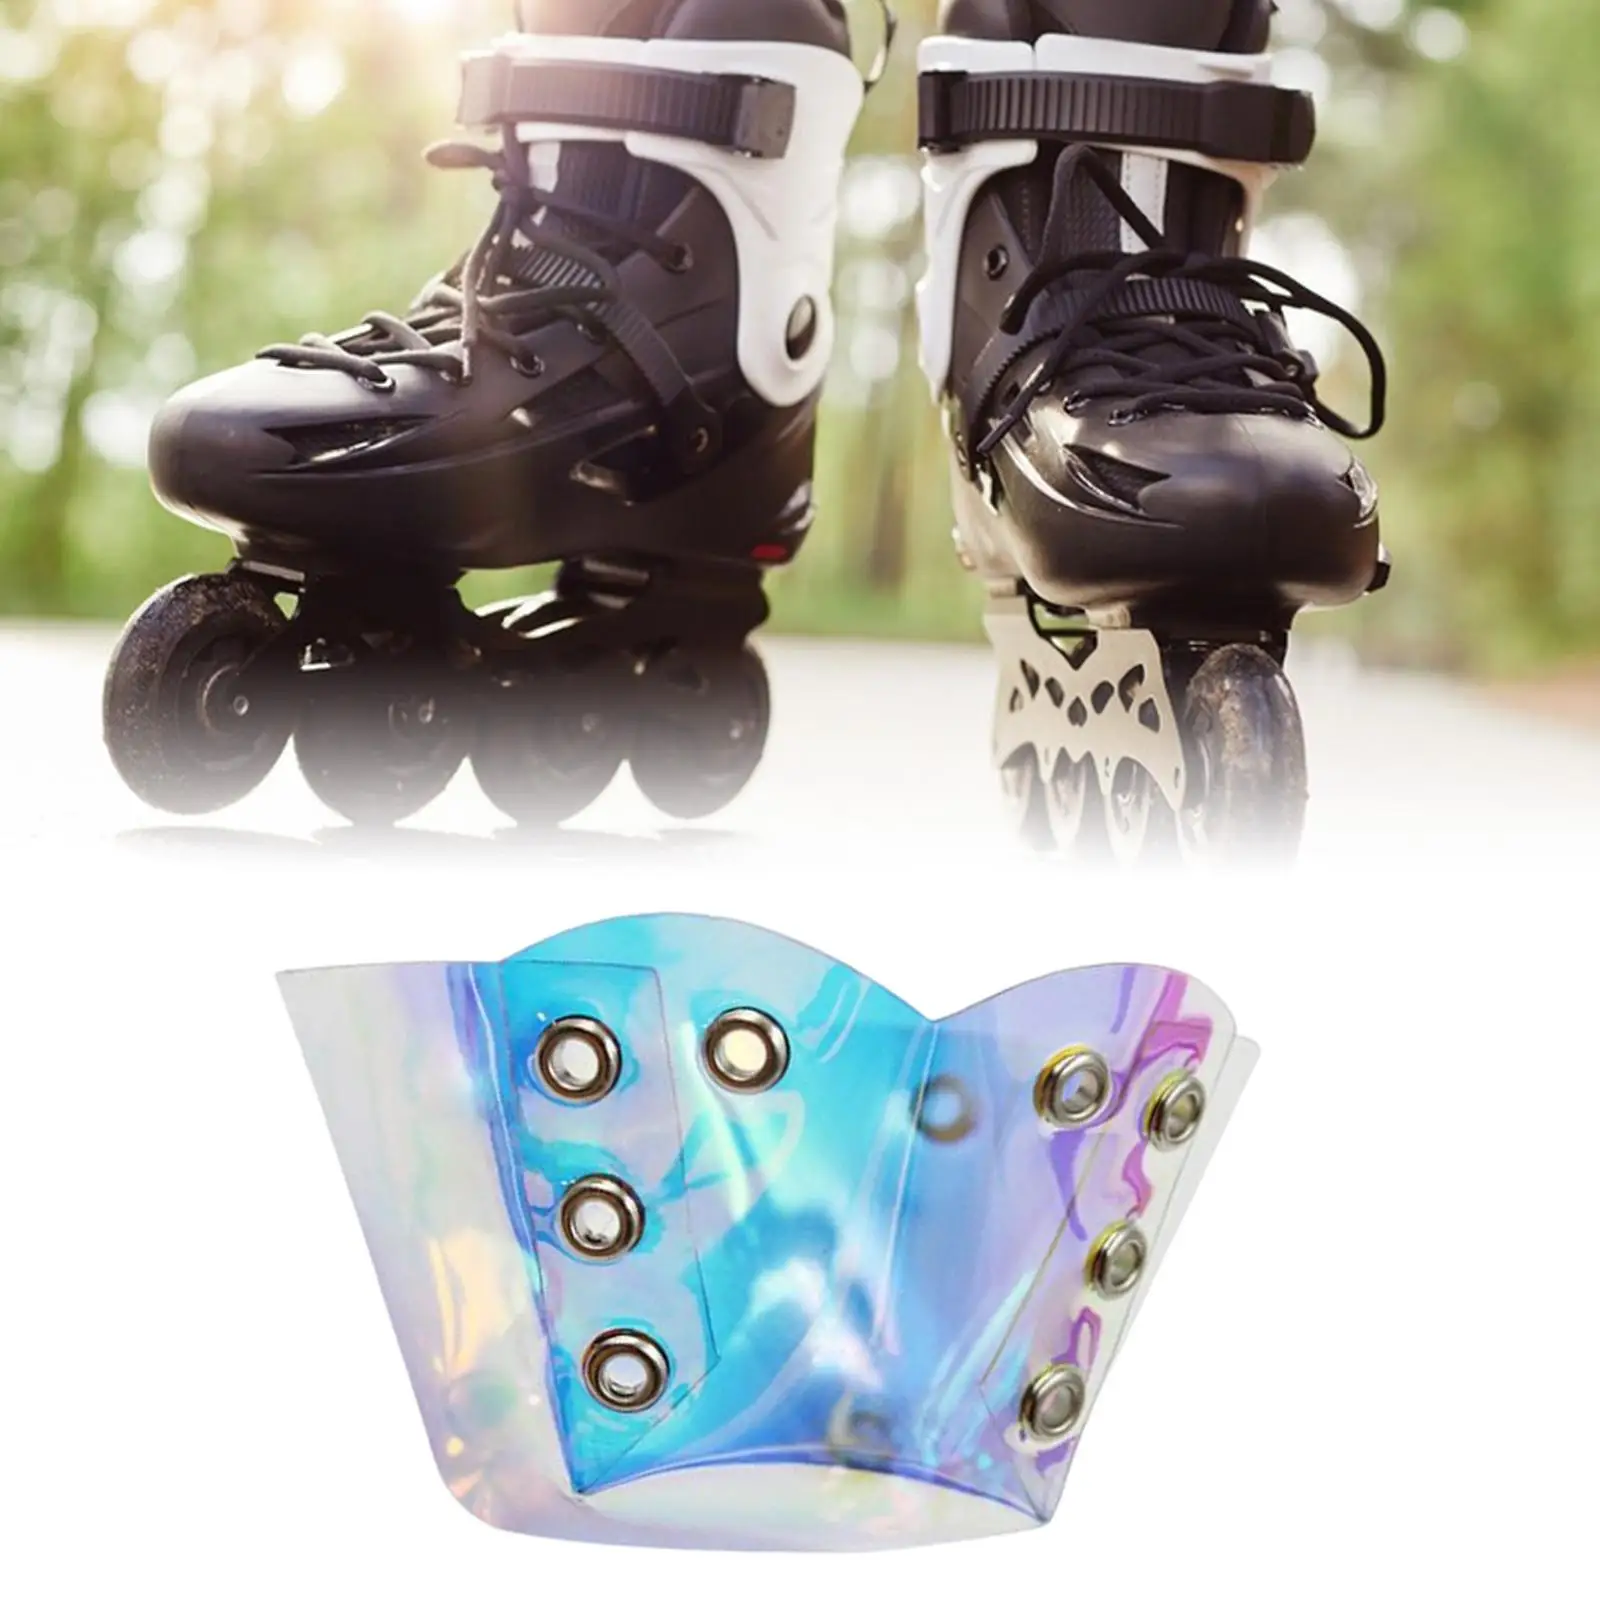 Roller Skate Toe Guards Protector 1x Roller Skate Cap Protectors for